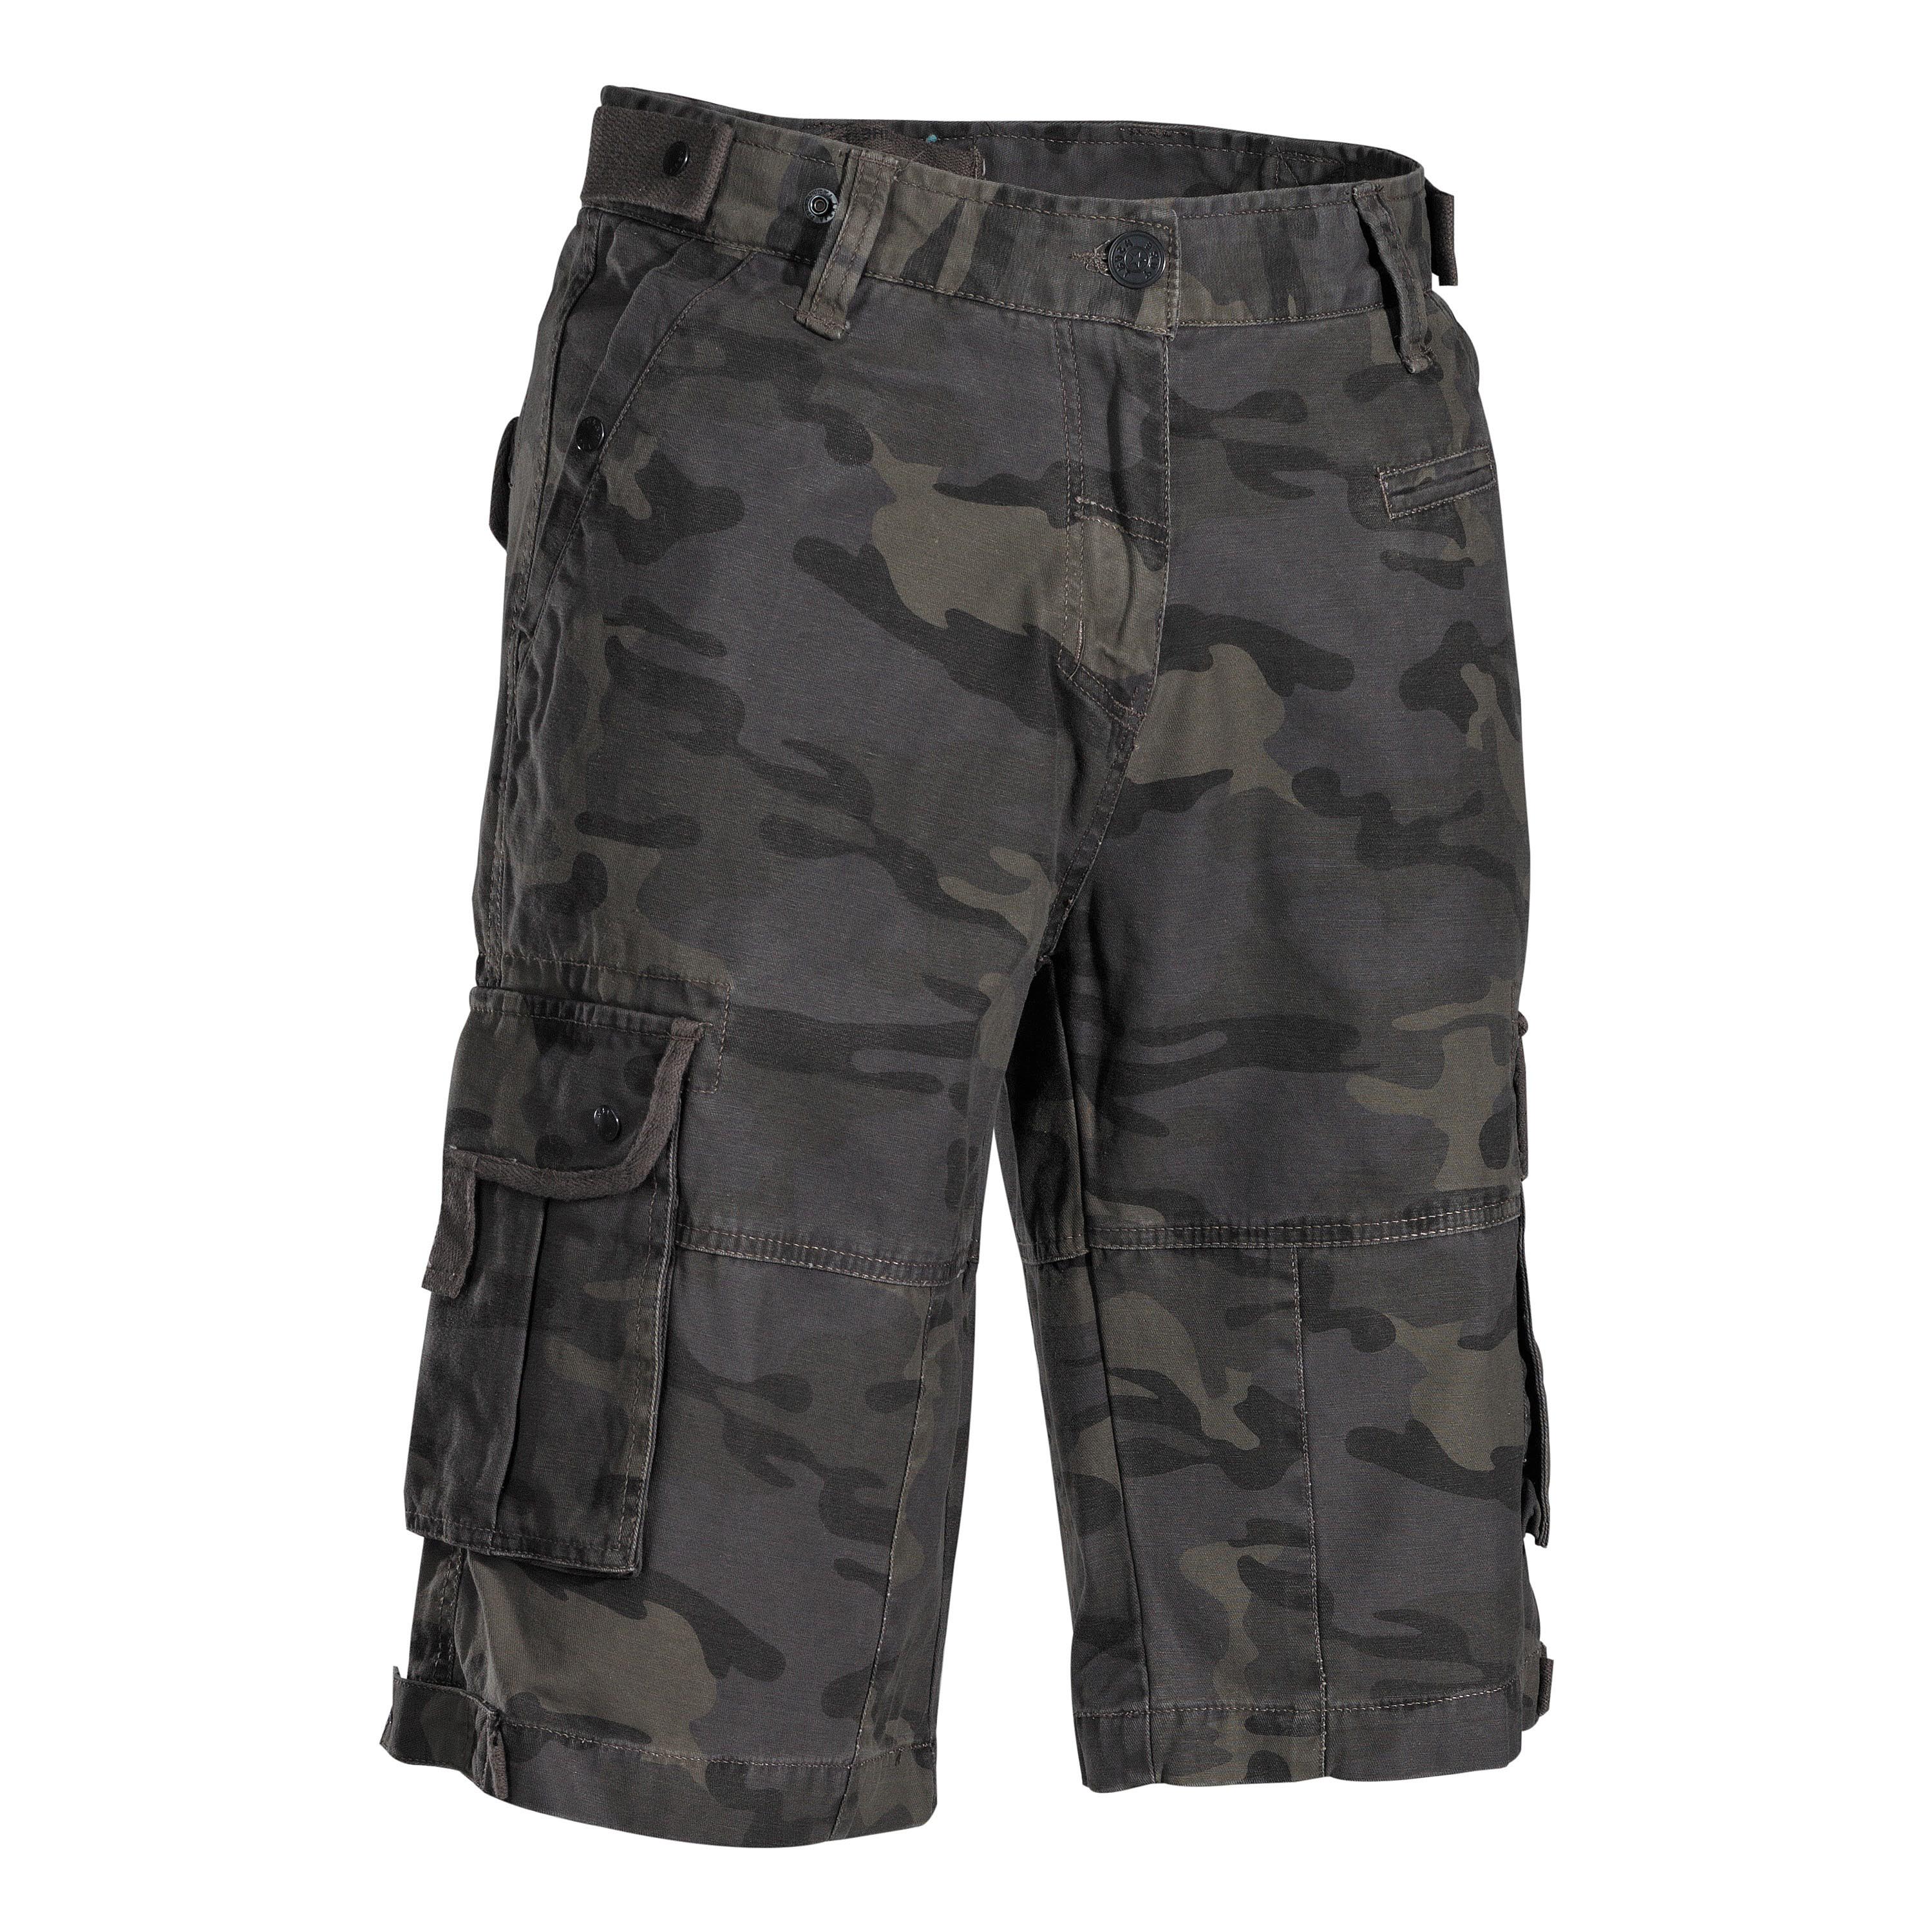 Bermuda Combo Shorts combat camo-stonewashed | Bermuda Combo Shorts ...